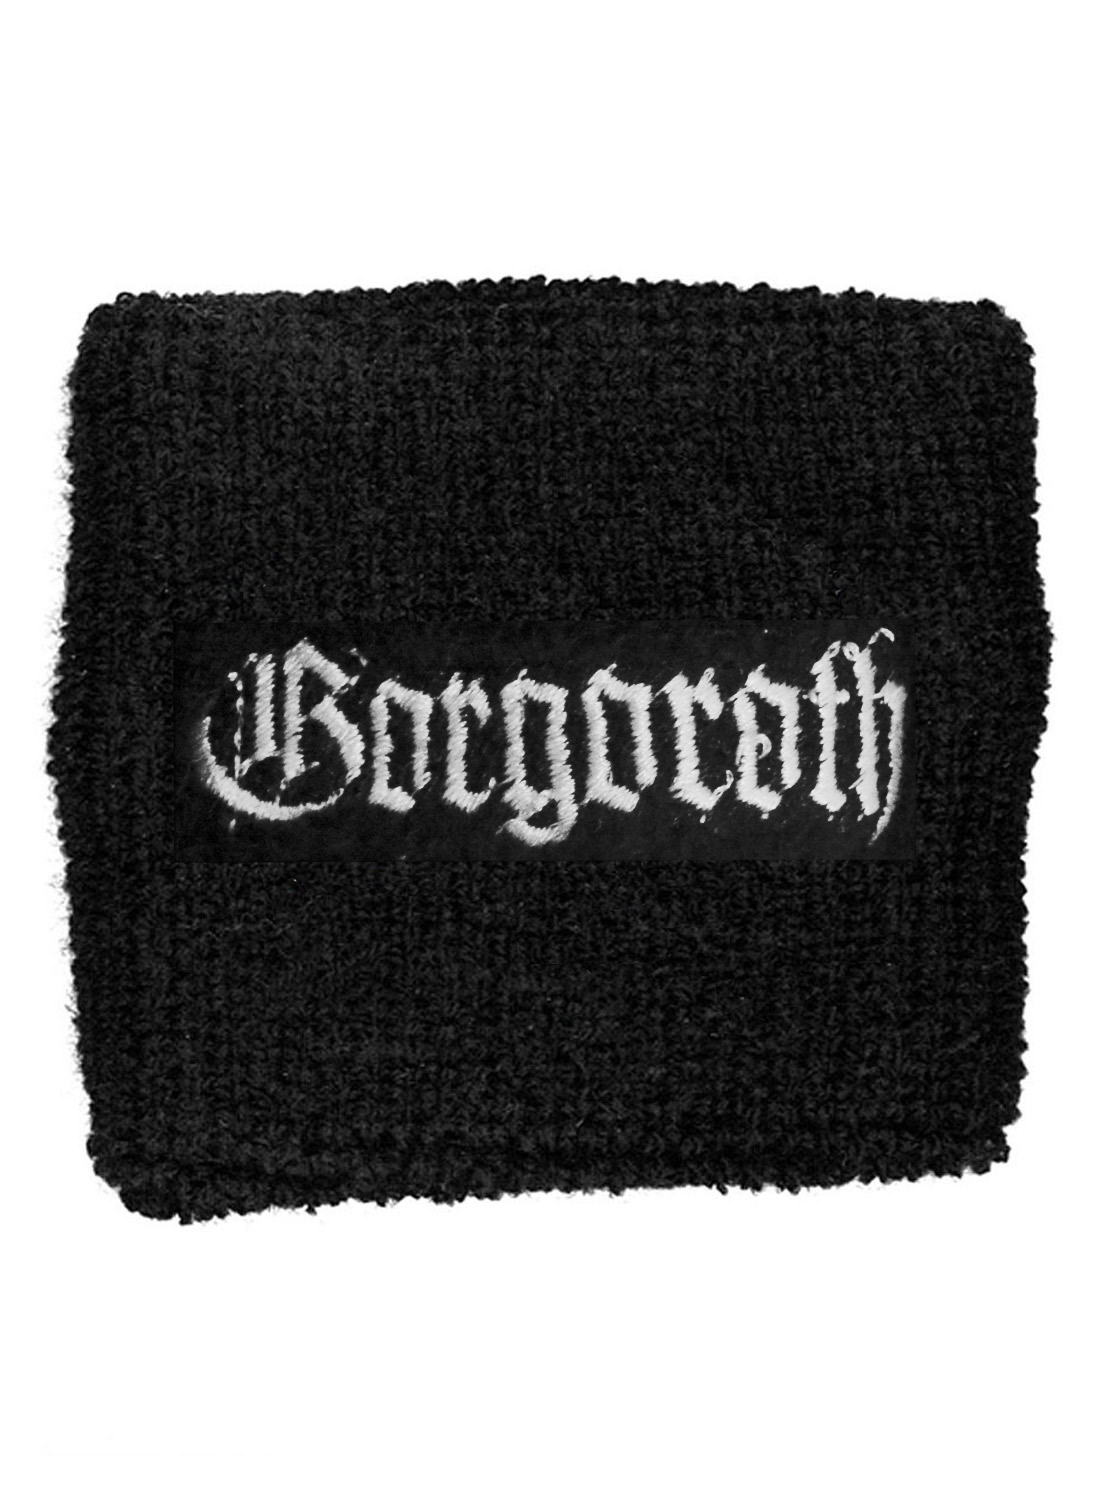 Gorgoroth Embroidered Sweatband